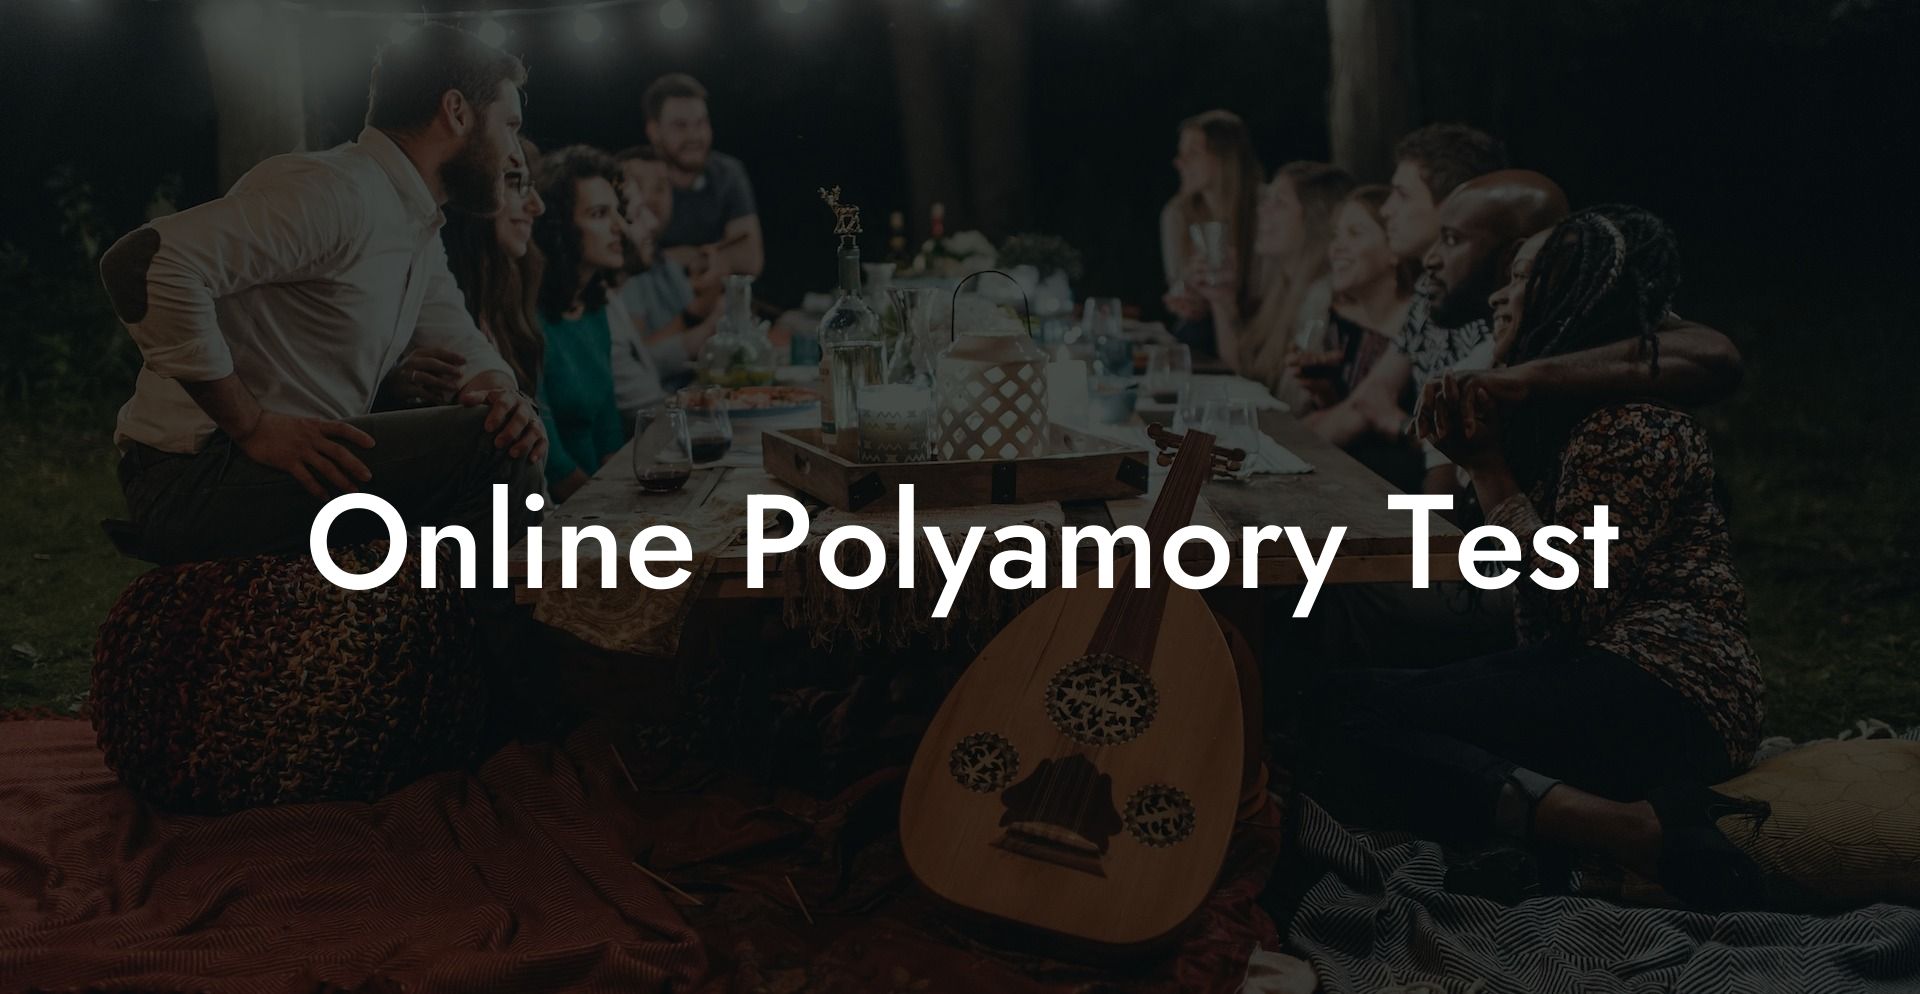 Online Polyamory Test